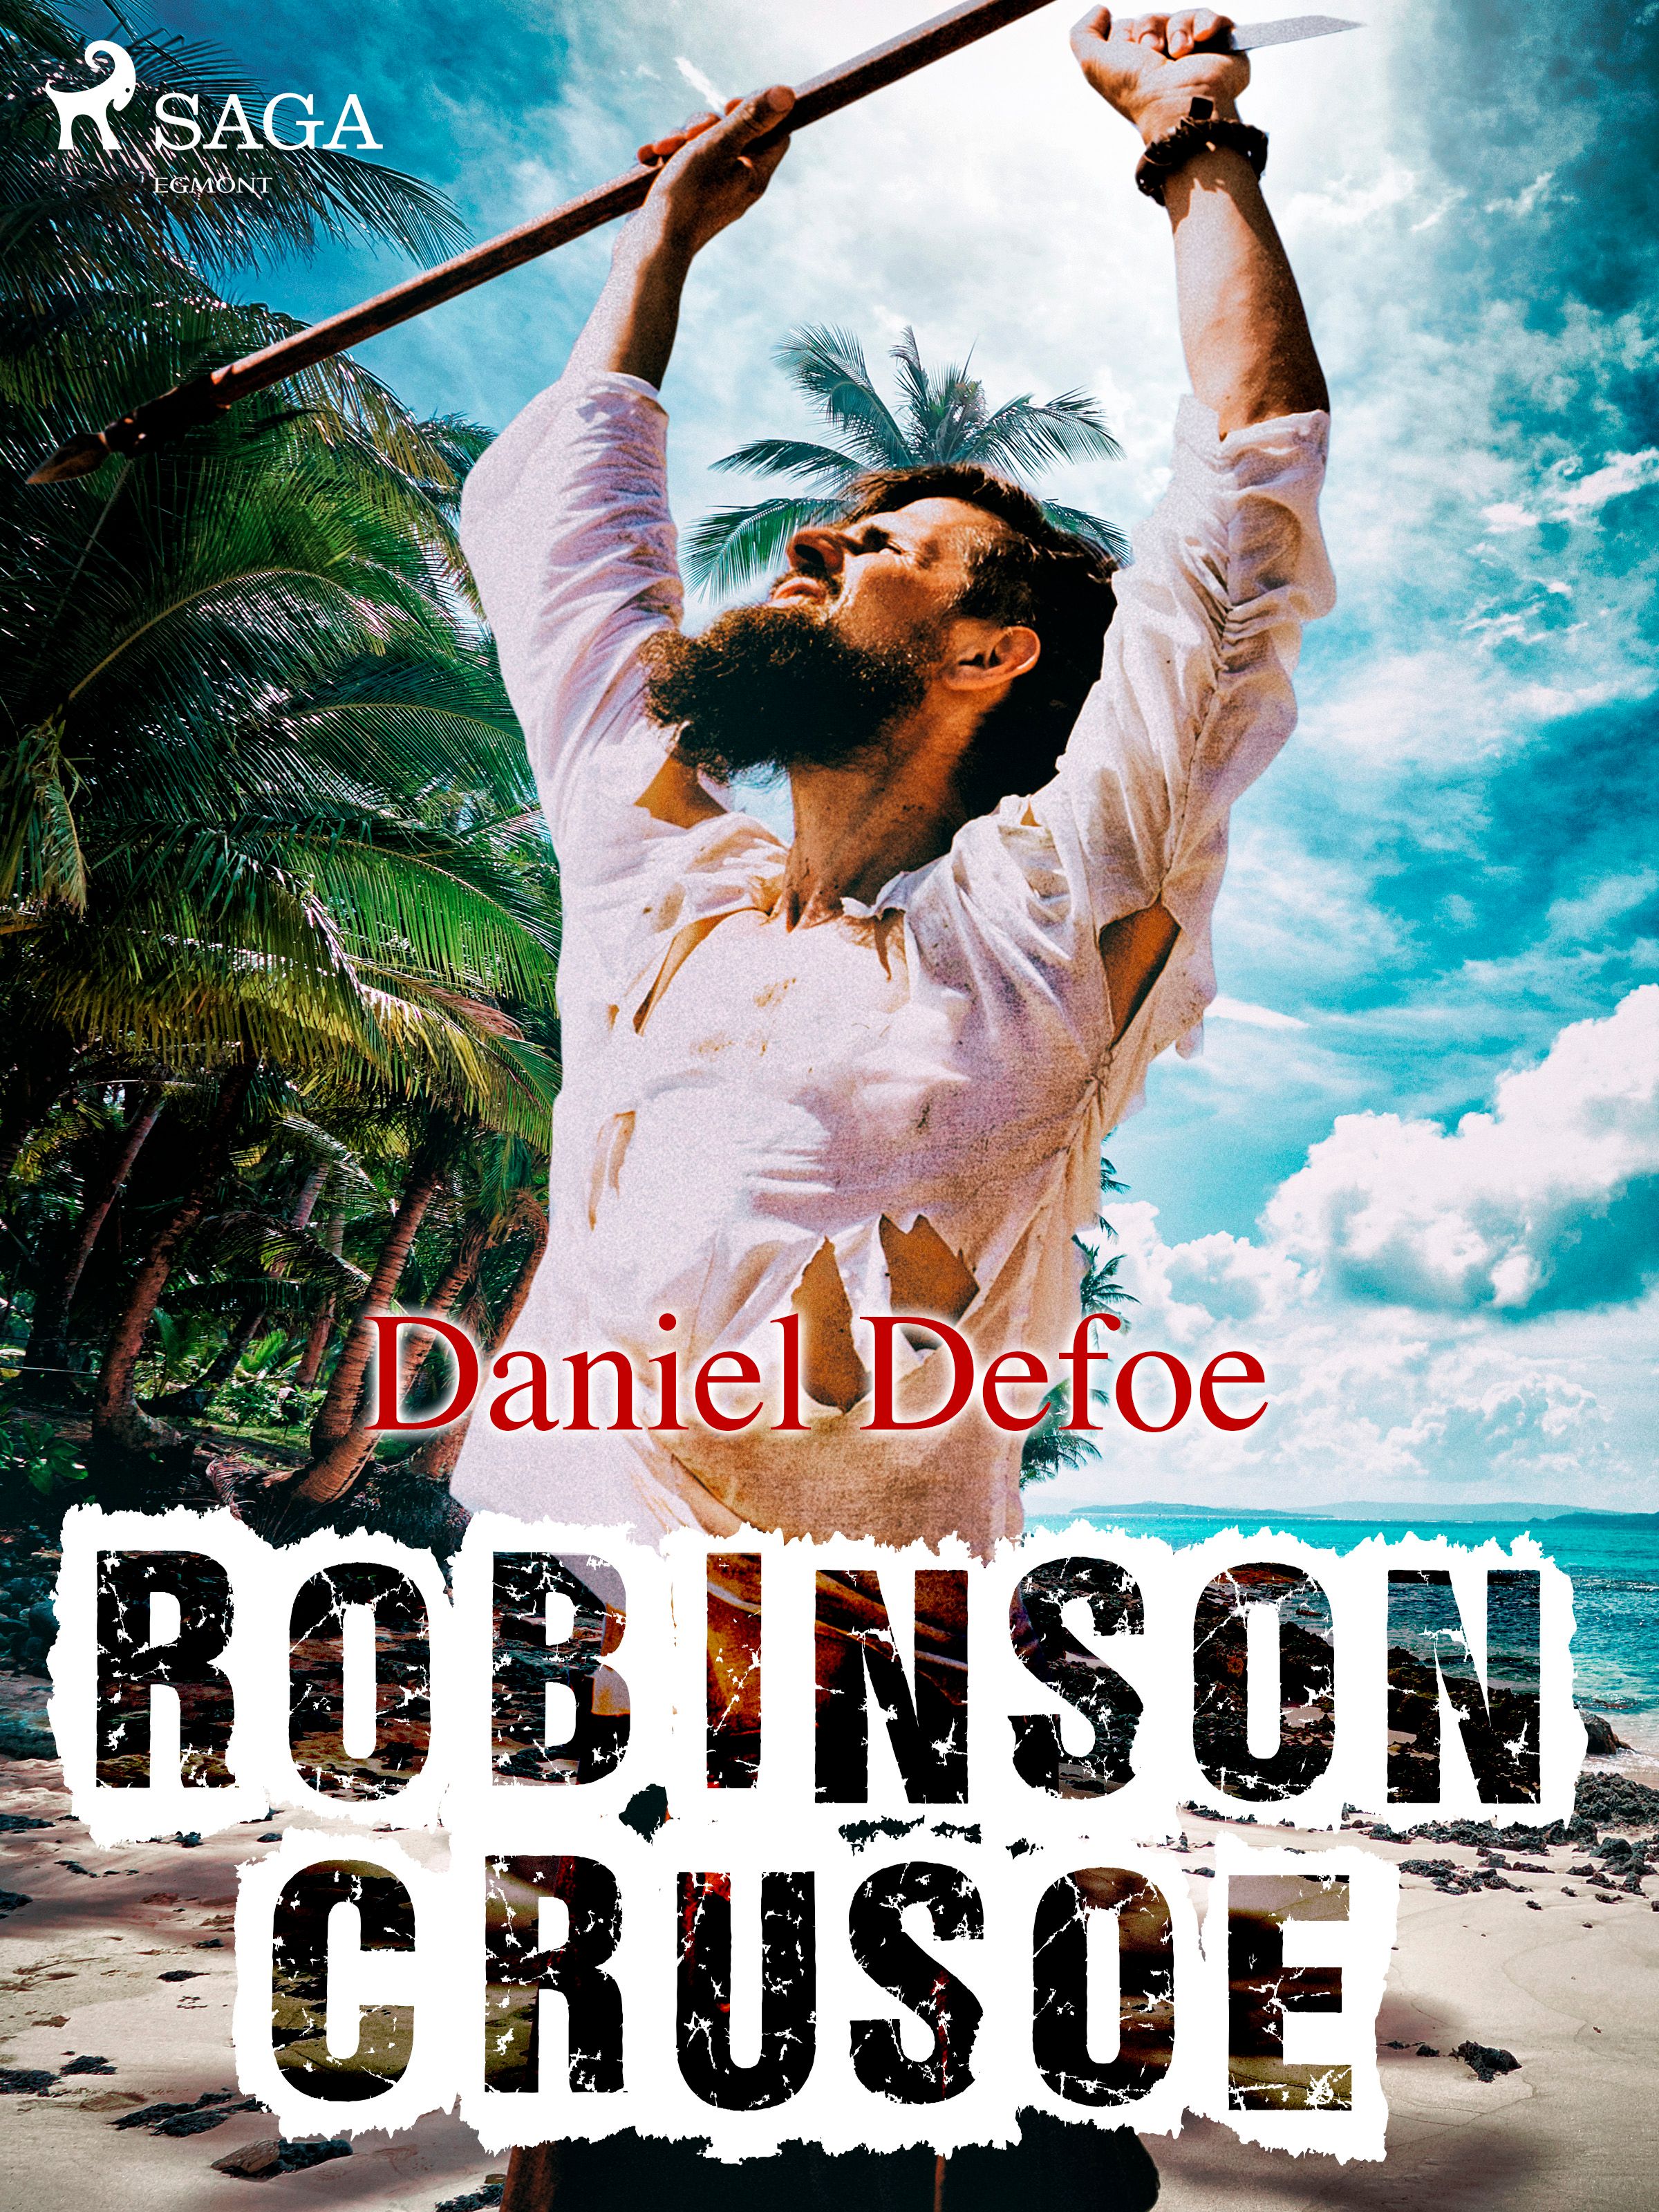 Robinson Crusoe, eBook by Daniel Defoe